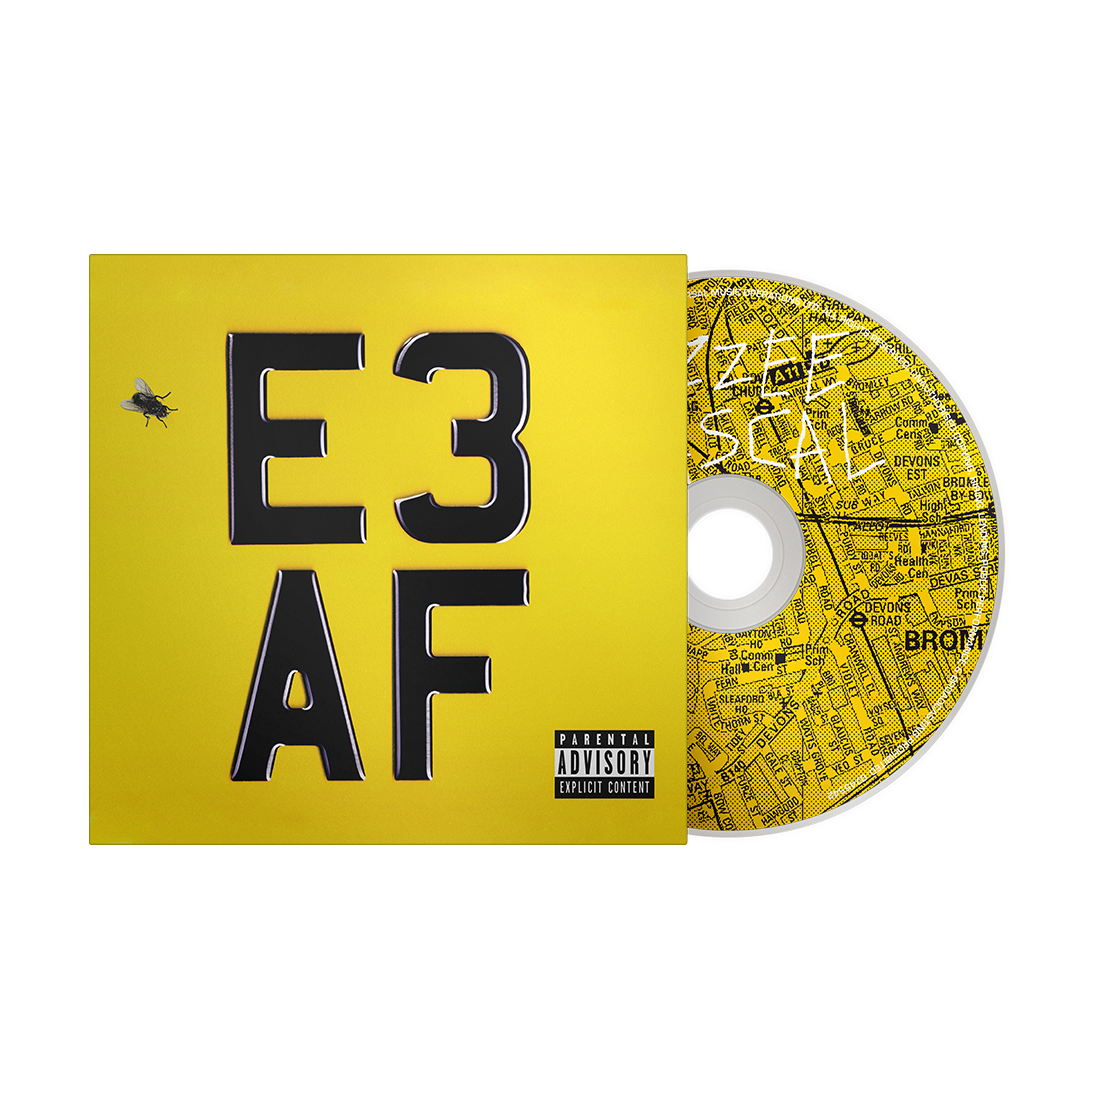 Dizzee Rascal - E3 AF: CD